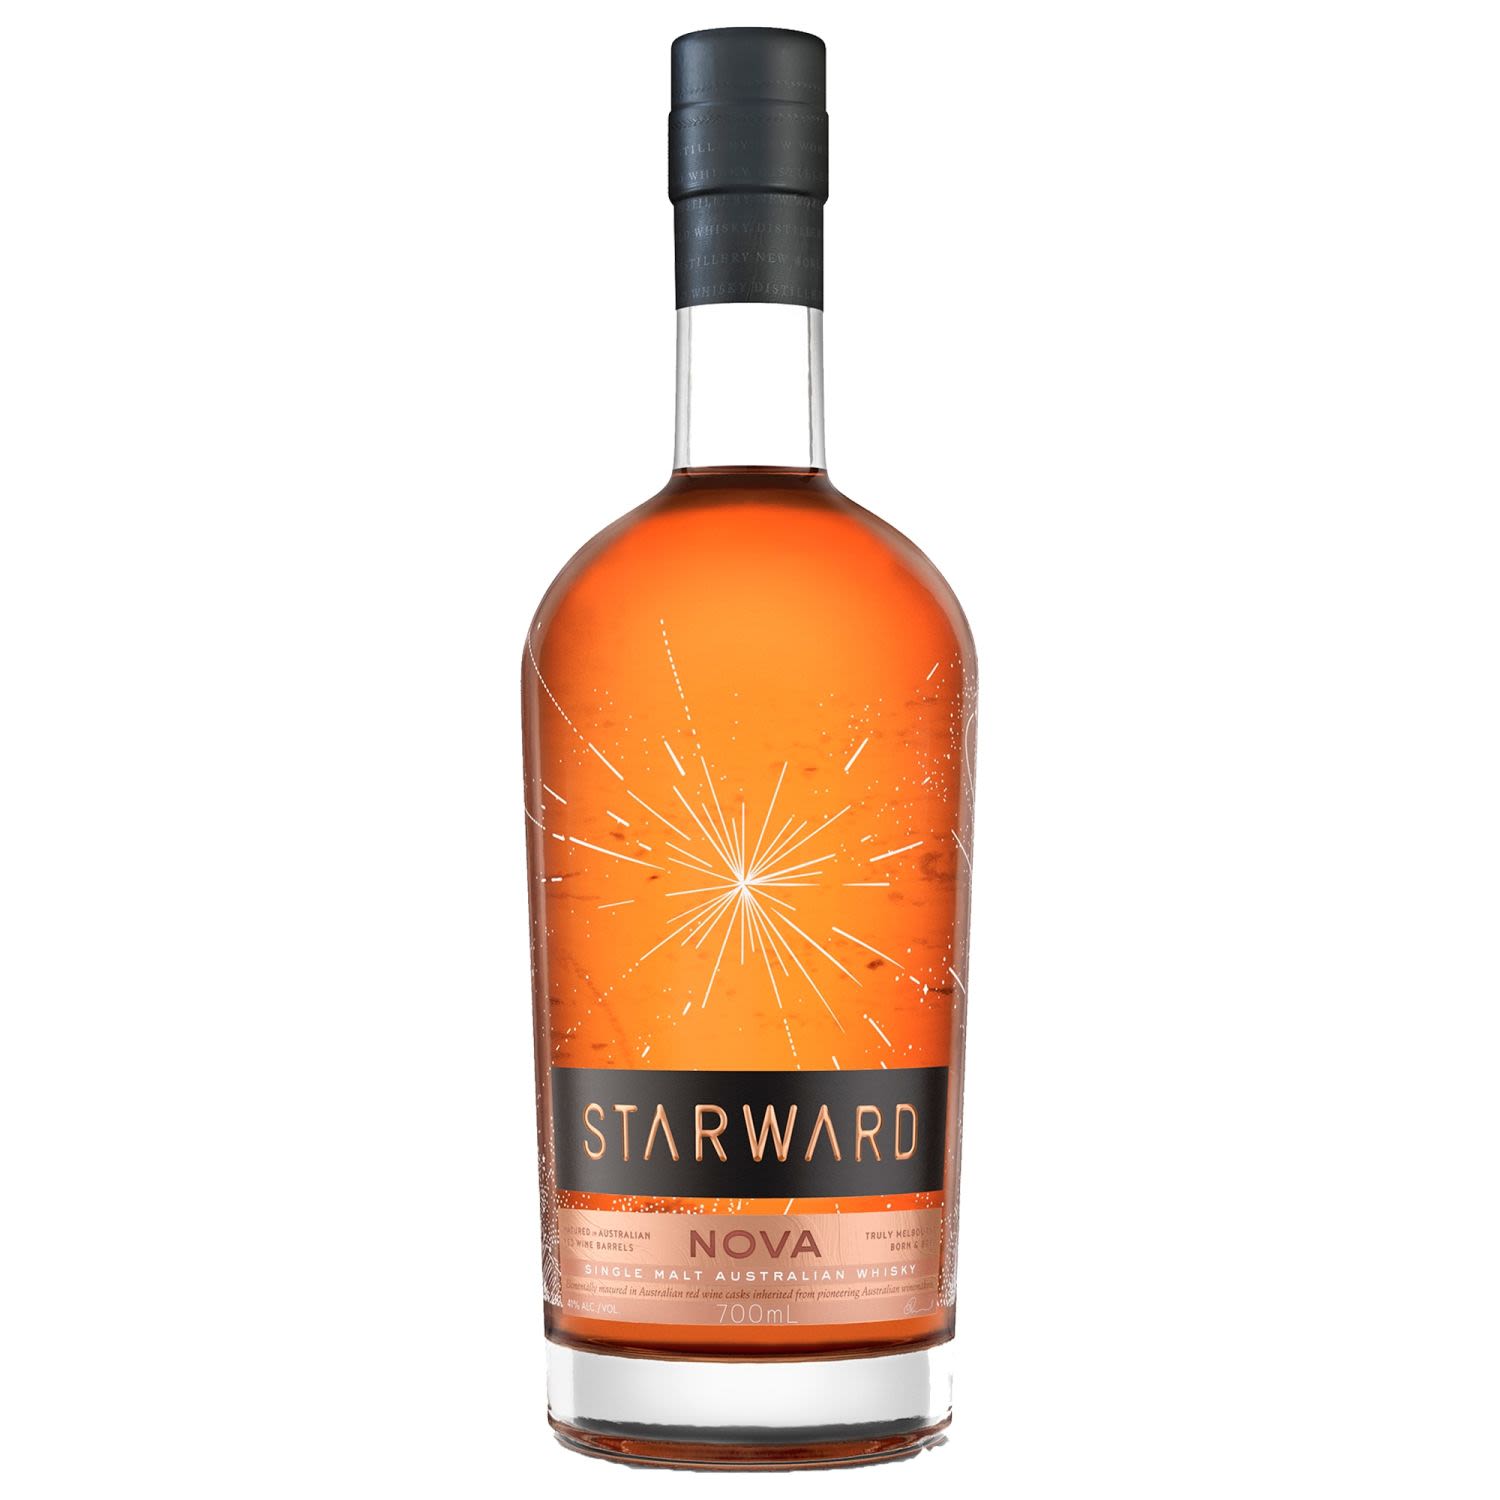 Starward NOVA Single Malt Australian Whisky 700mL Bottle